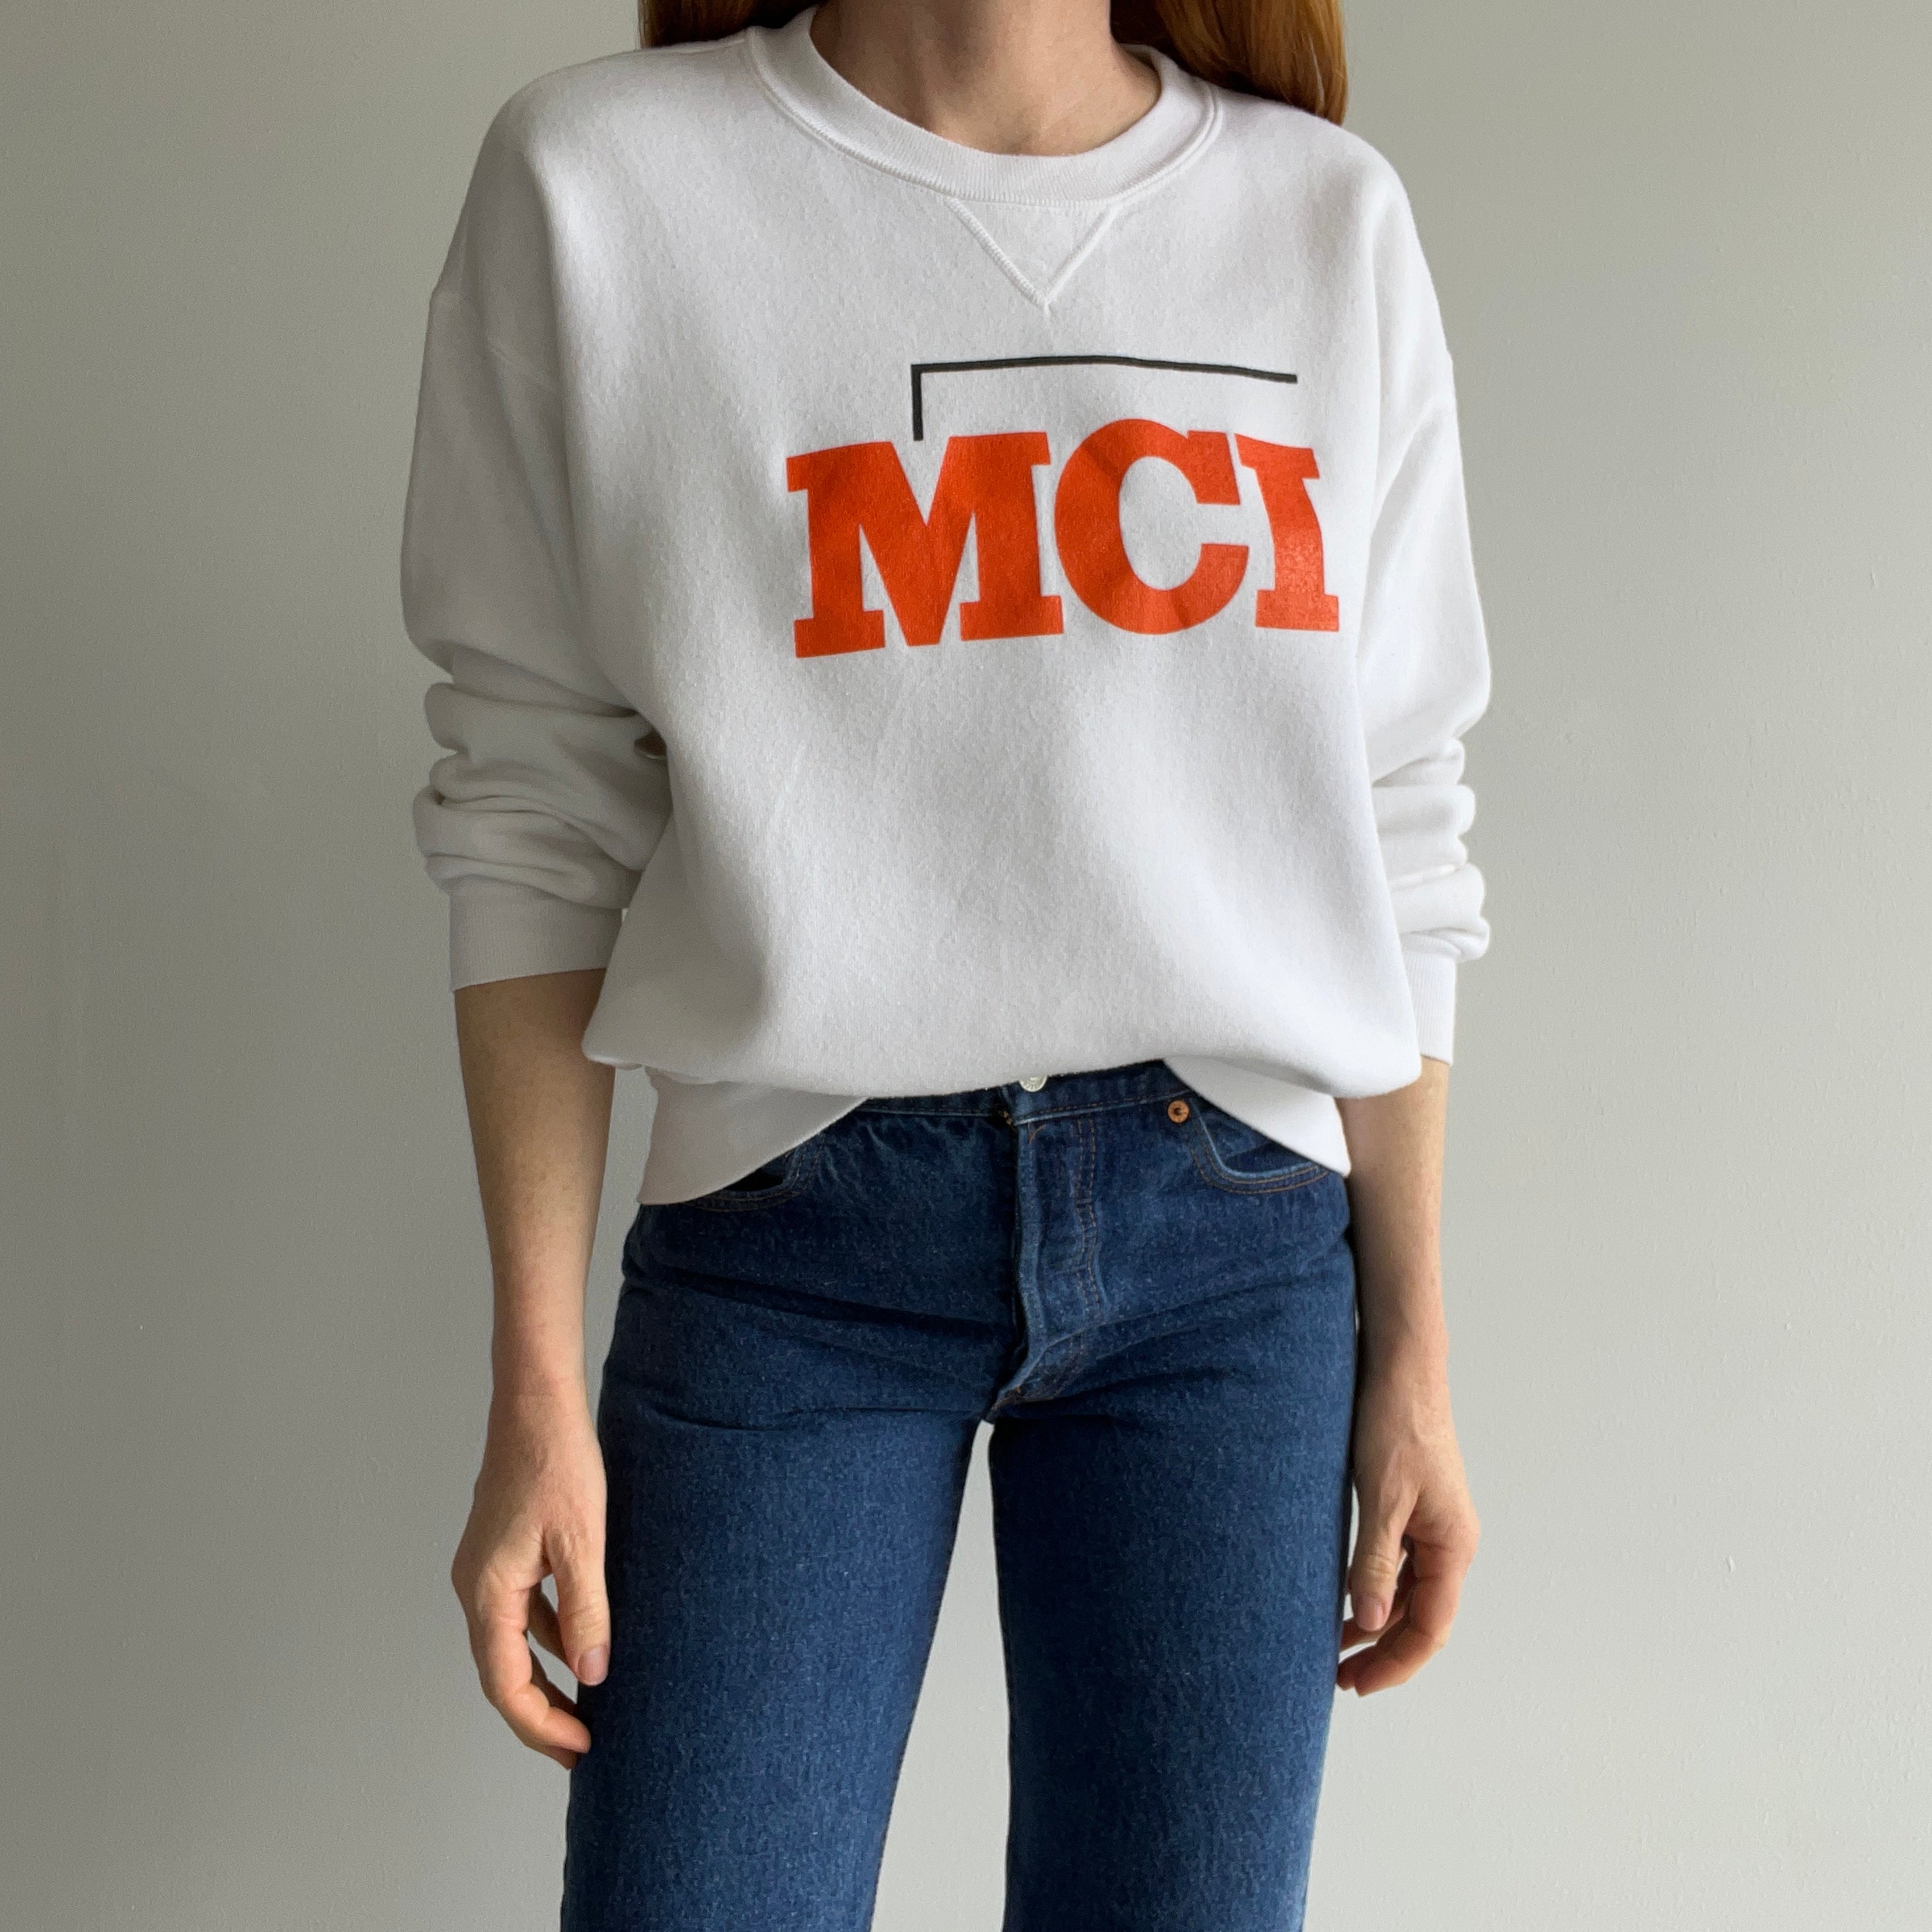 1980s MCI Sweatshirt